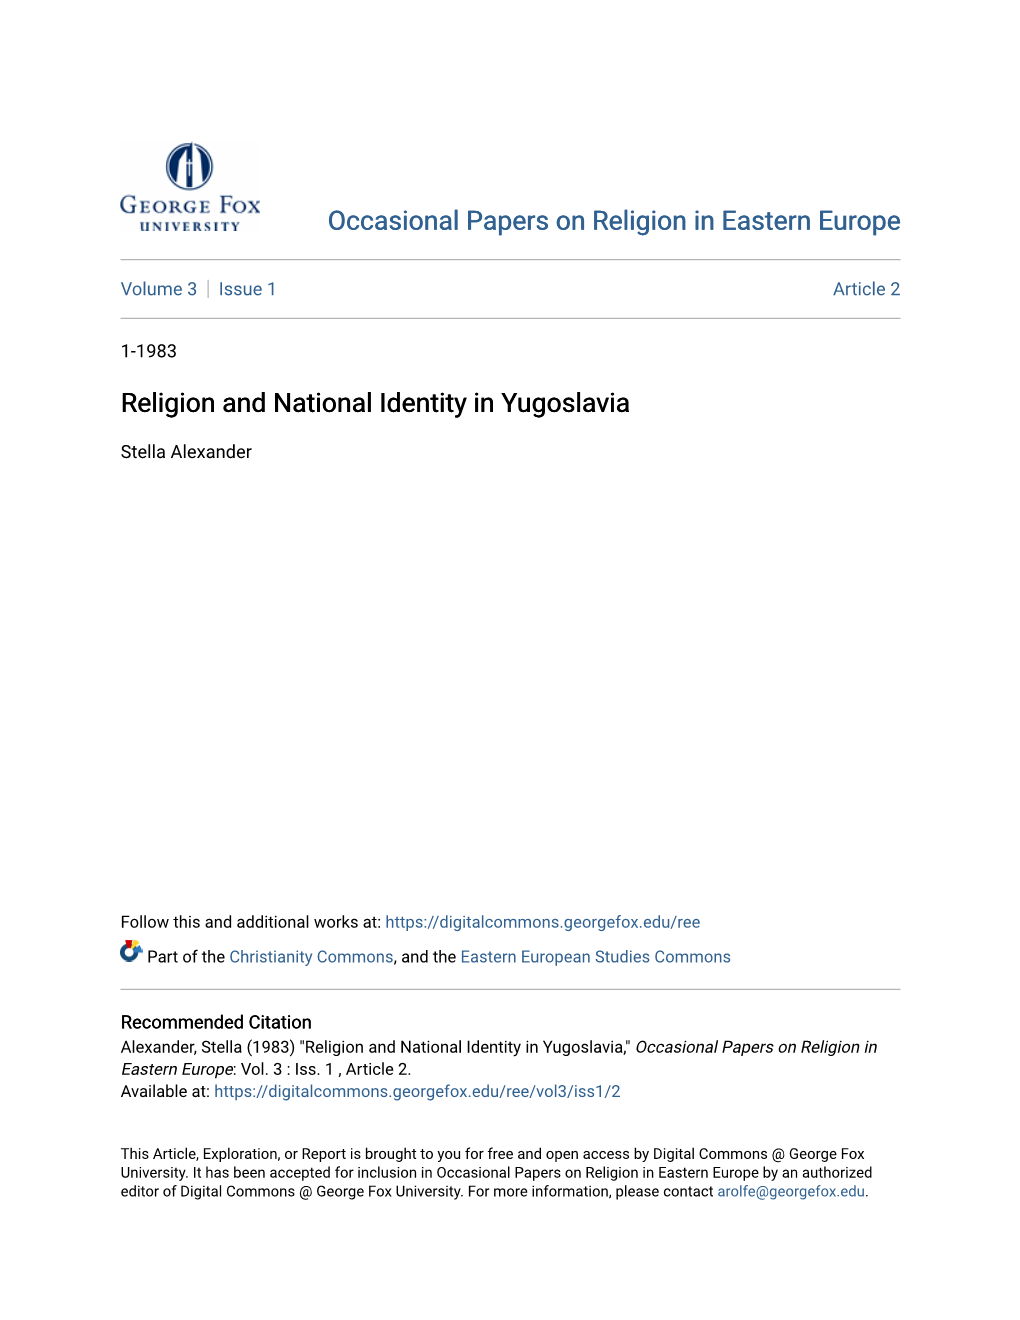 Religion and National Identity in Yugoslavia